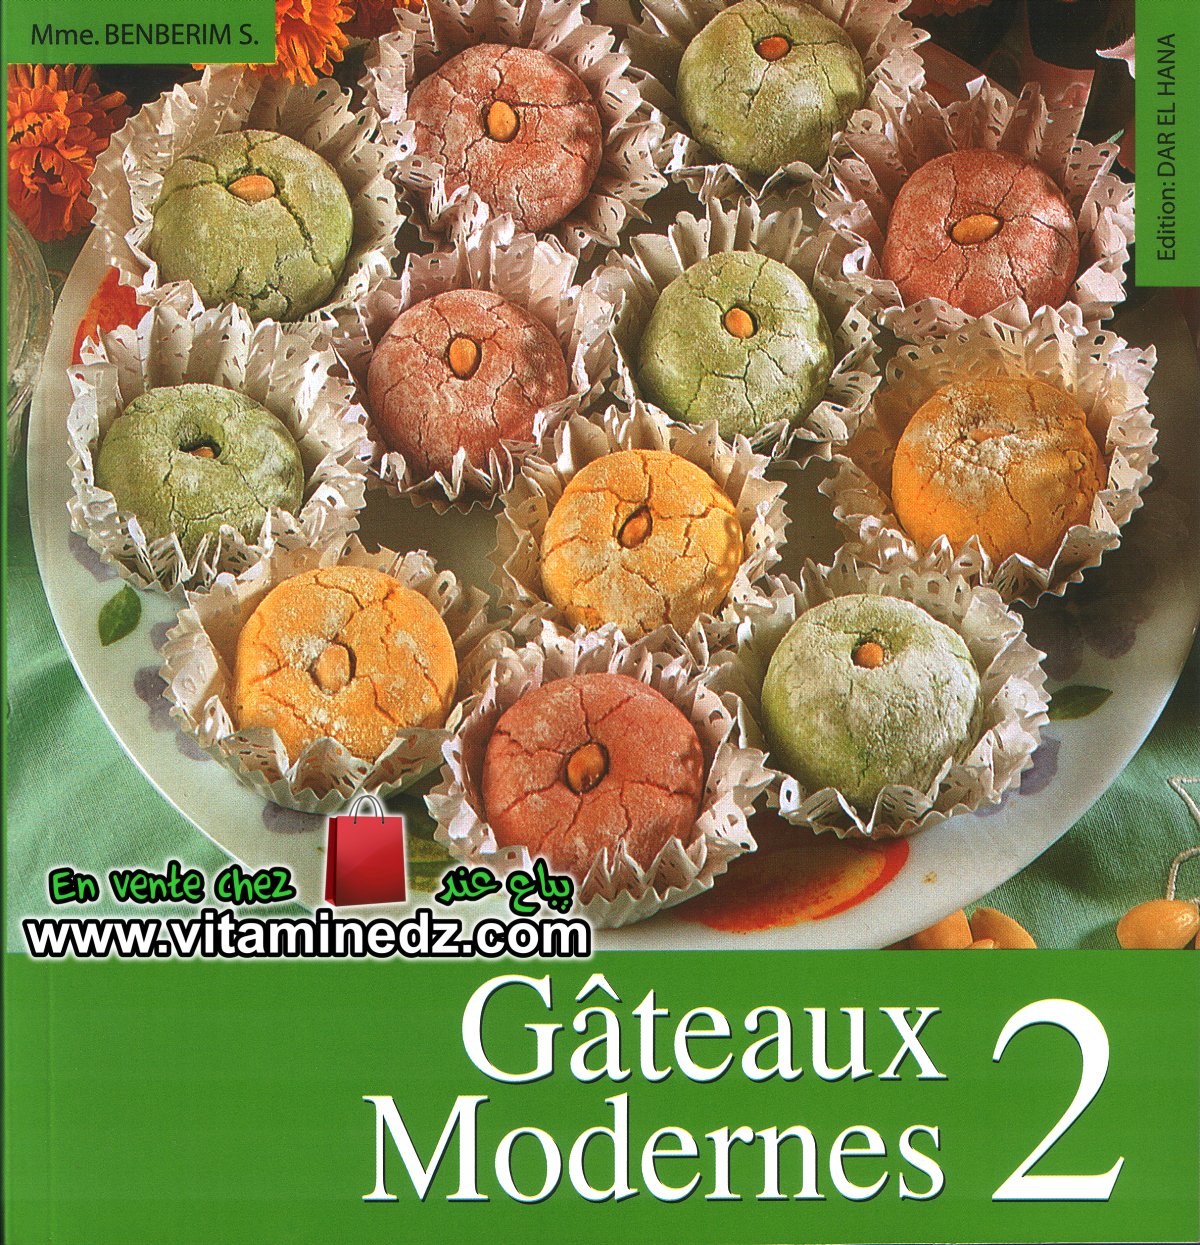 BENBERIM Saïda - Gâteaux modernes 2